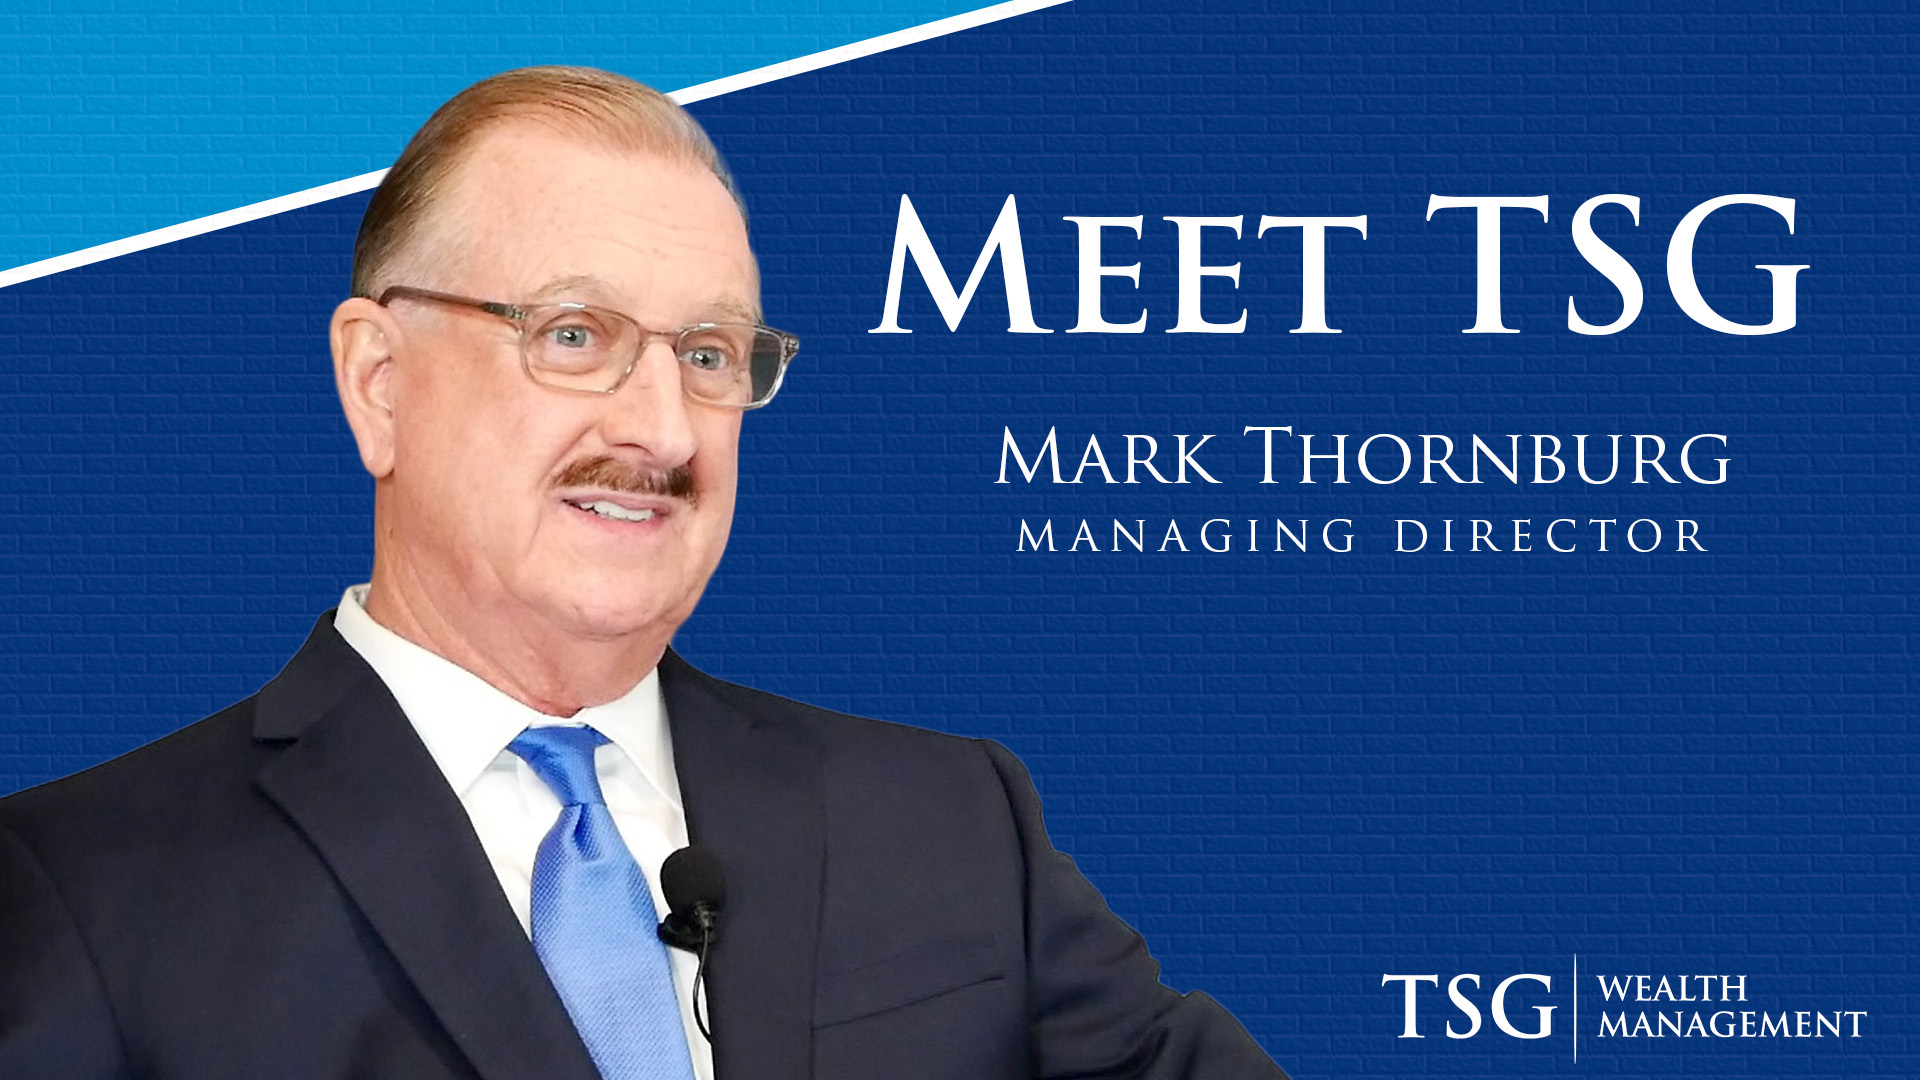 Meet TSG Managing Director Mark Thornburg